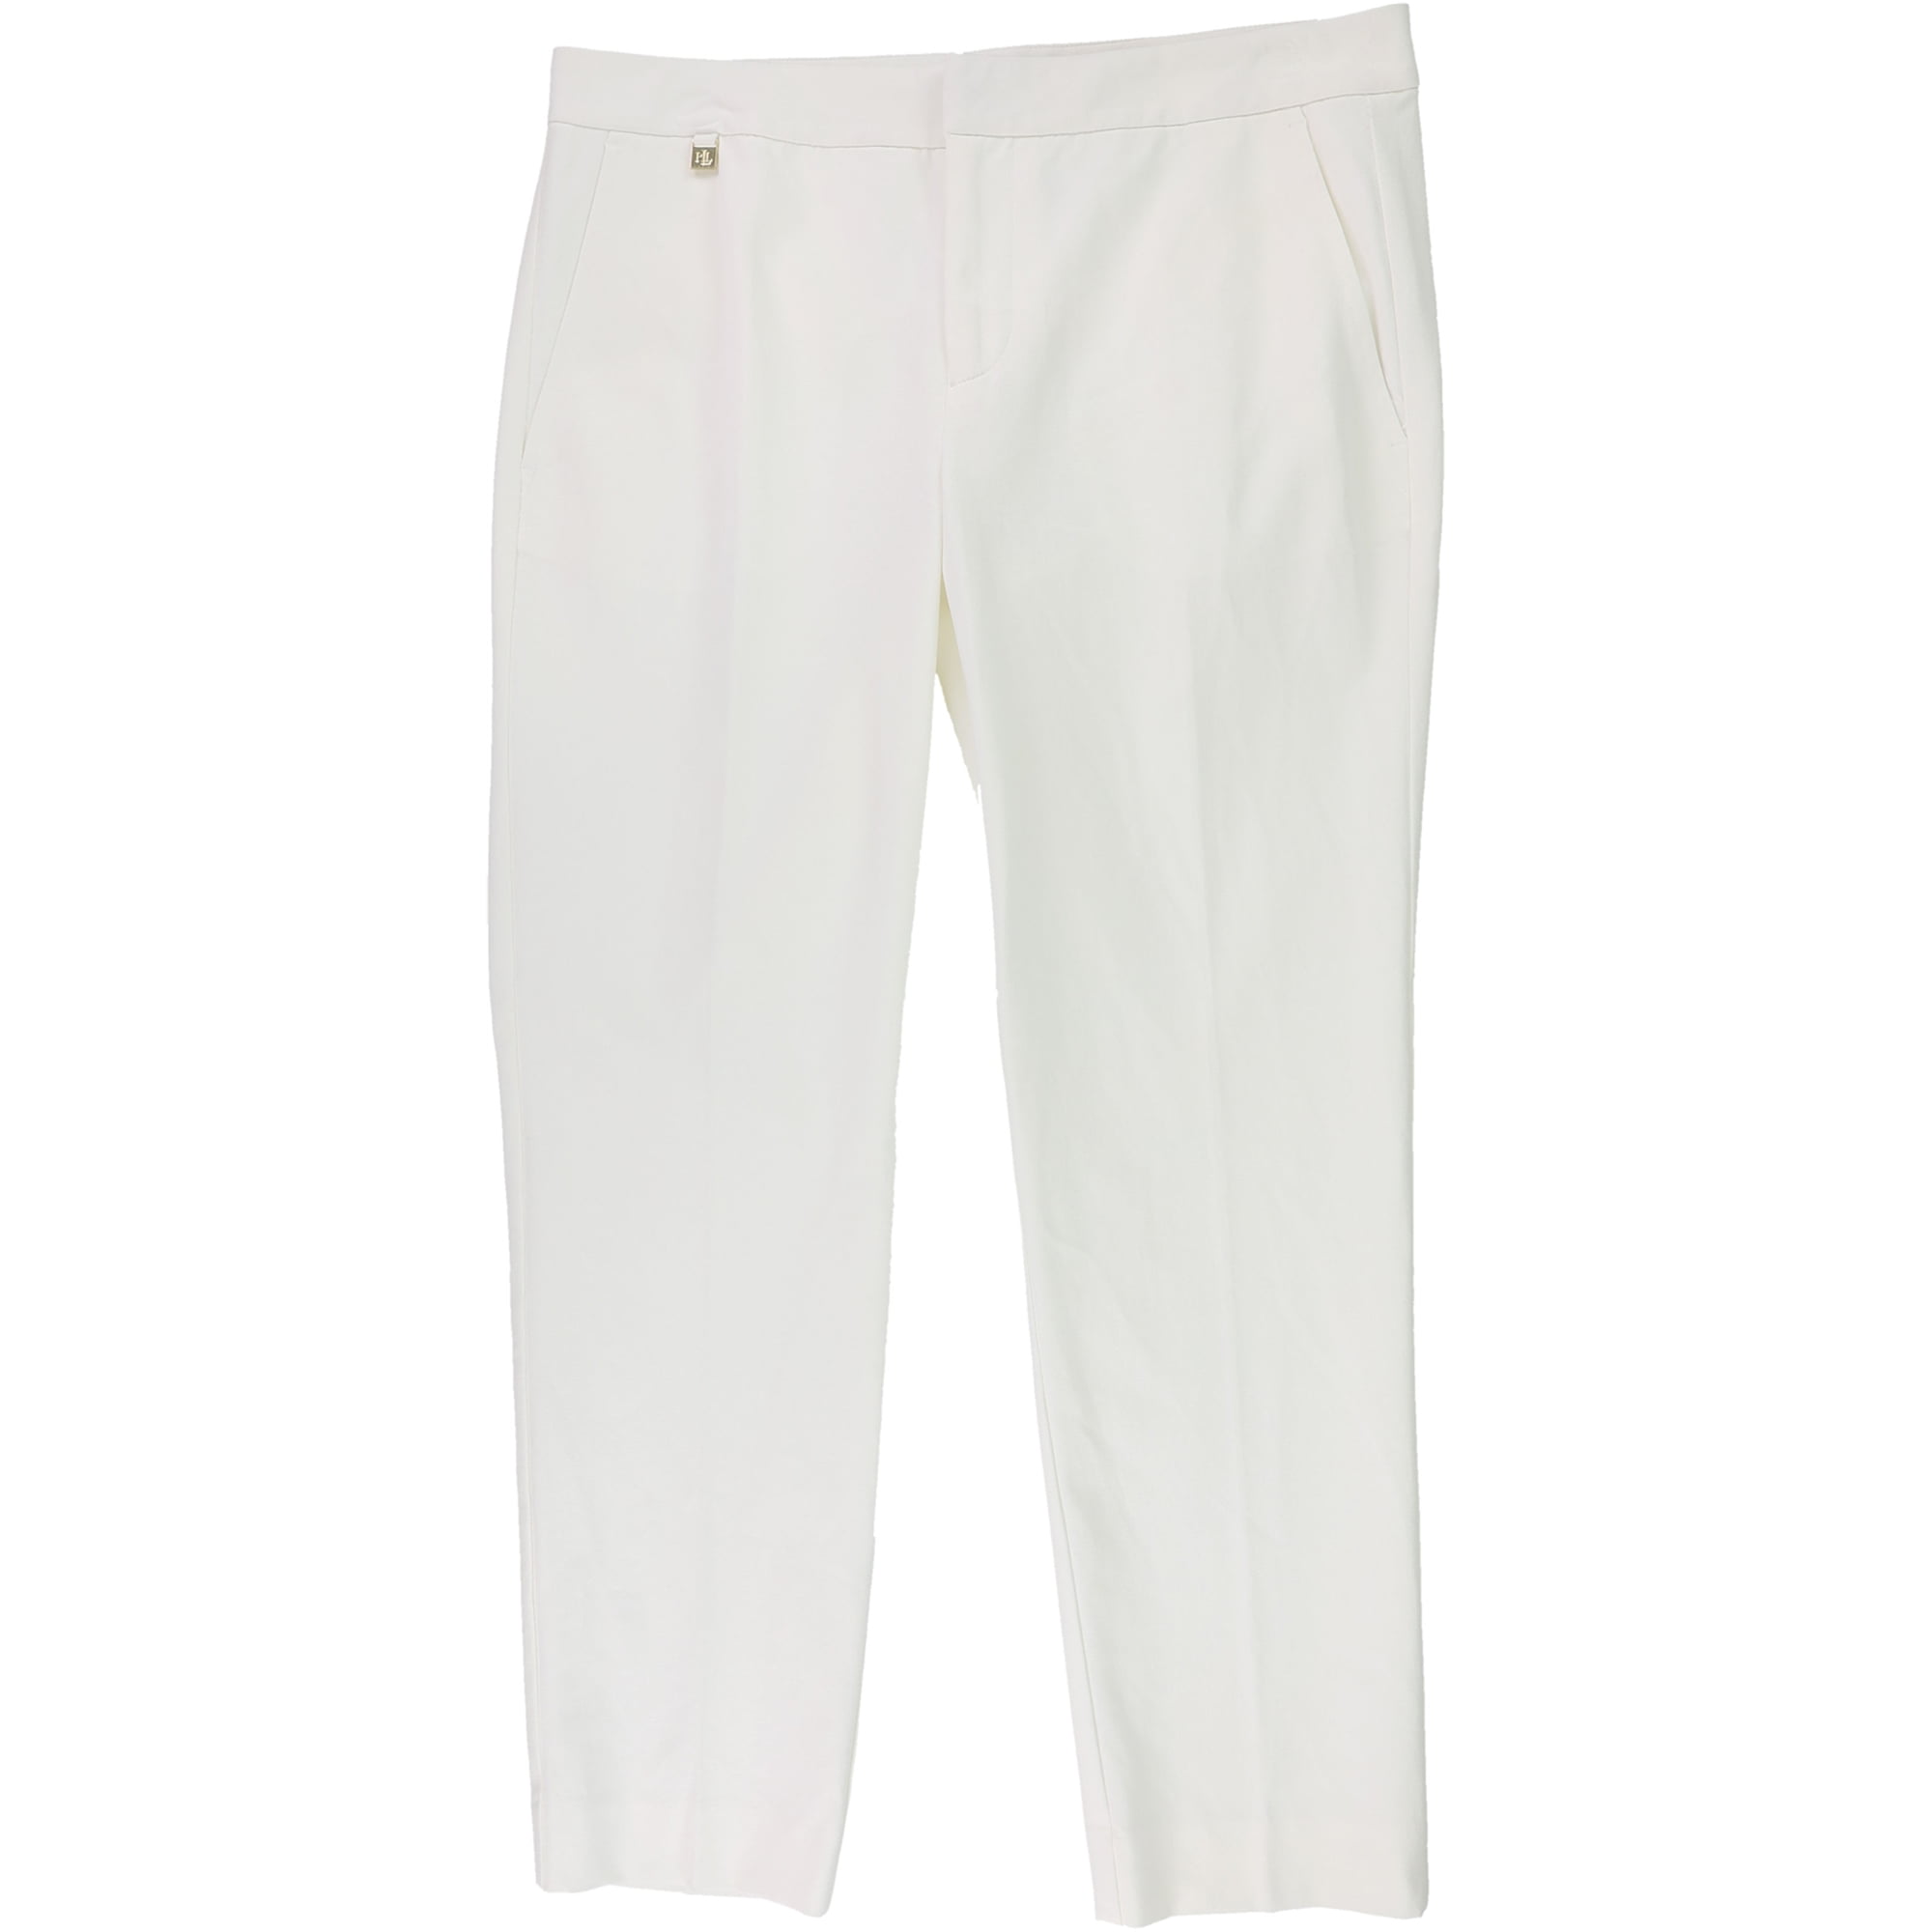 Ralph Lauren Womens Solid Casual Trouser Pants, Off-White, 8P - Walmart.com